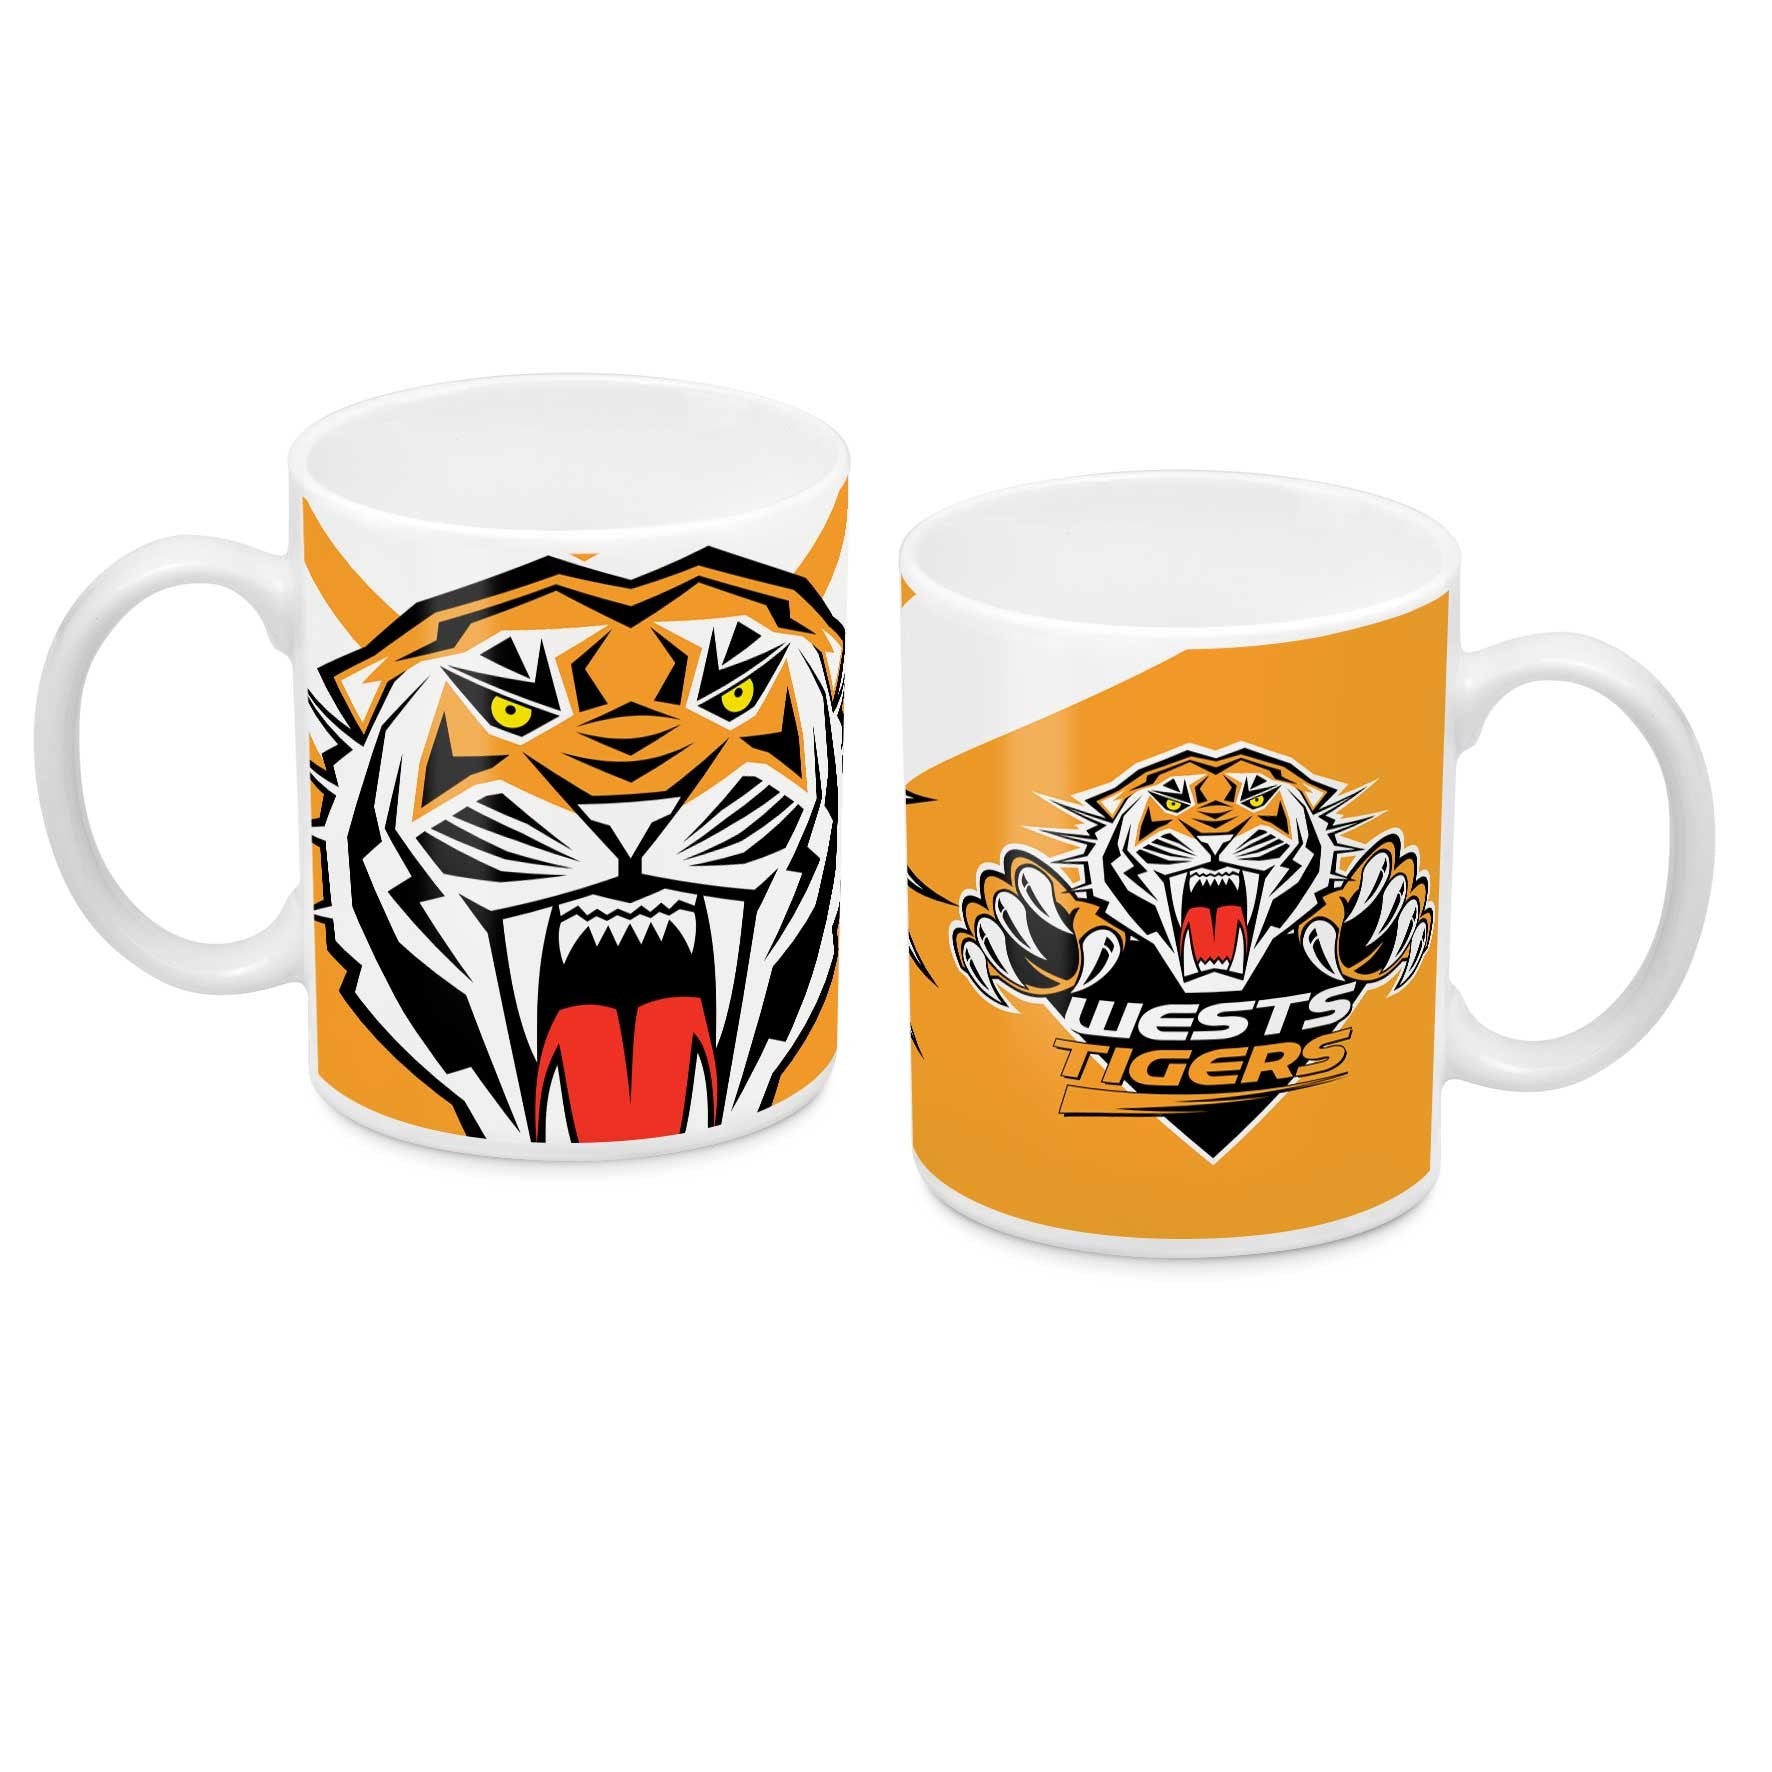 Wests Tigers Tigers Ceramic Mug